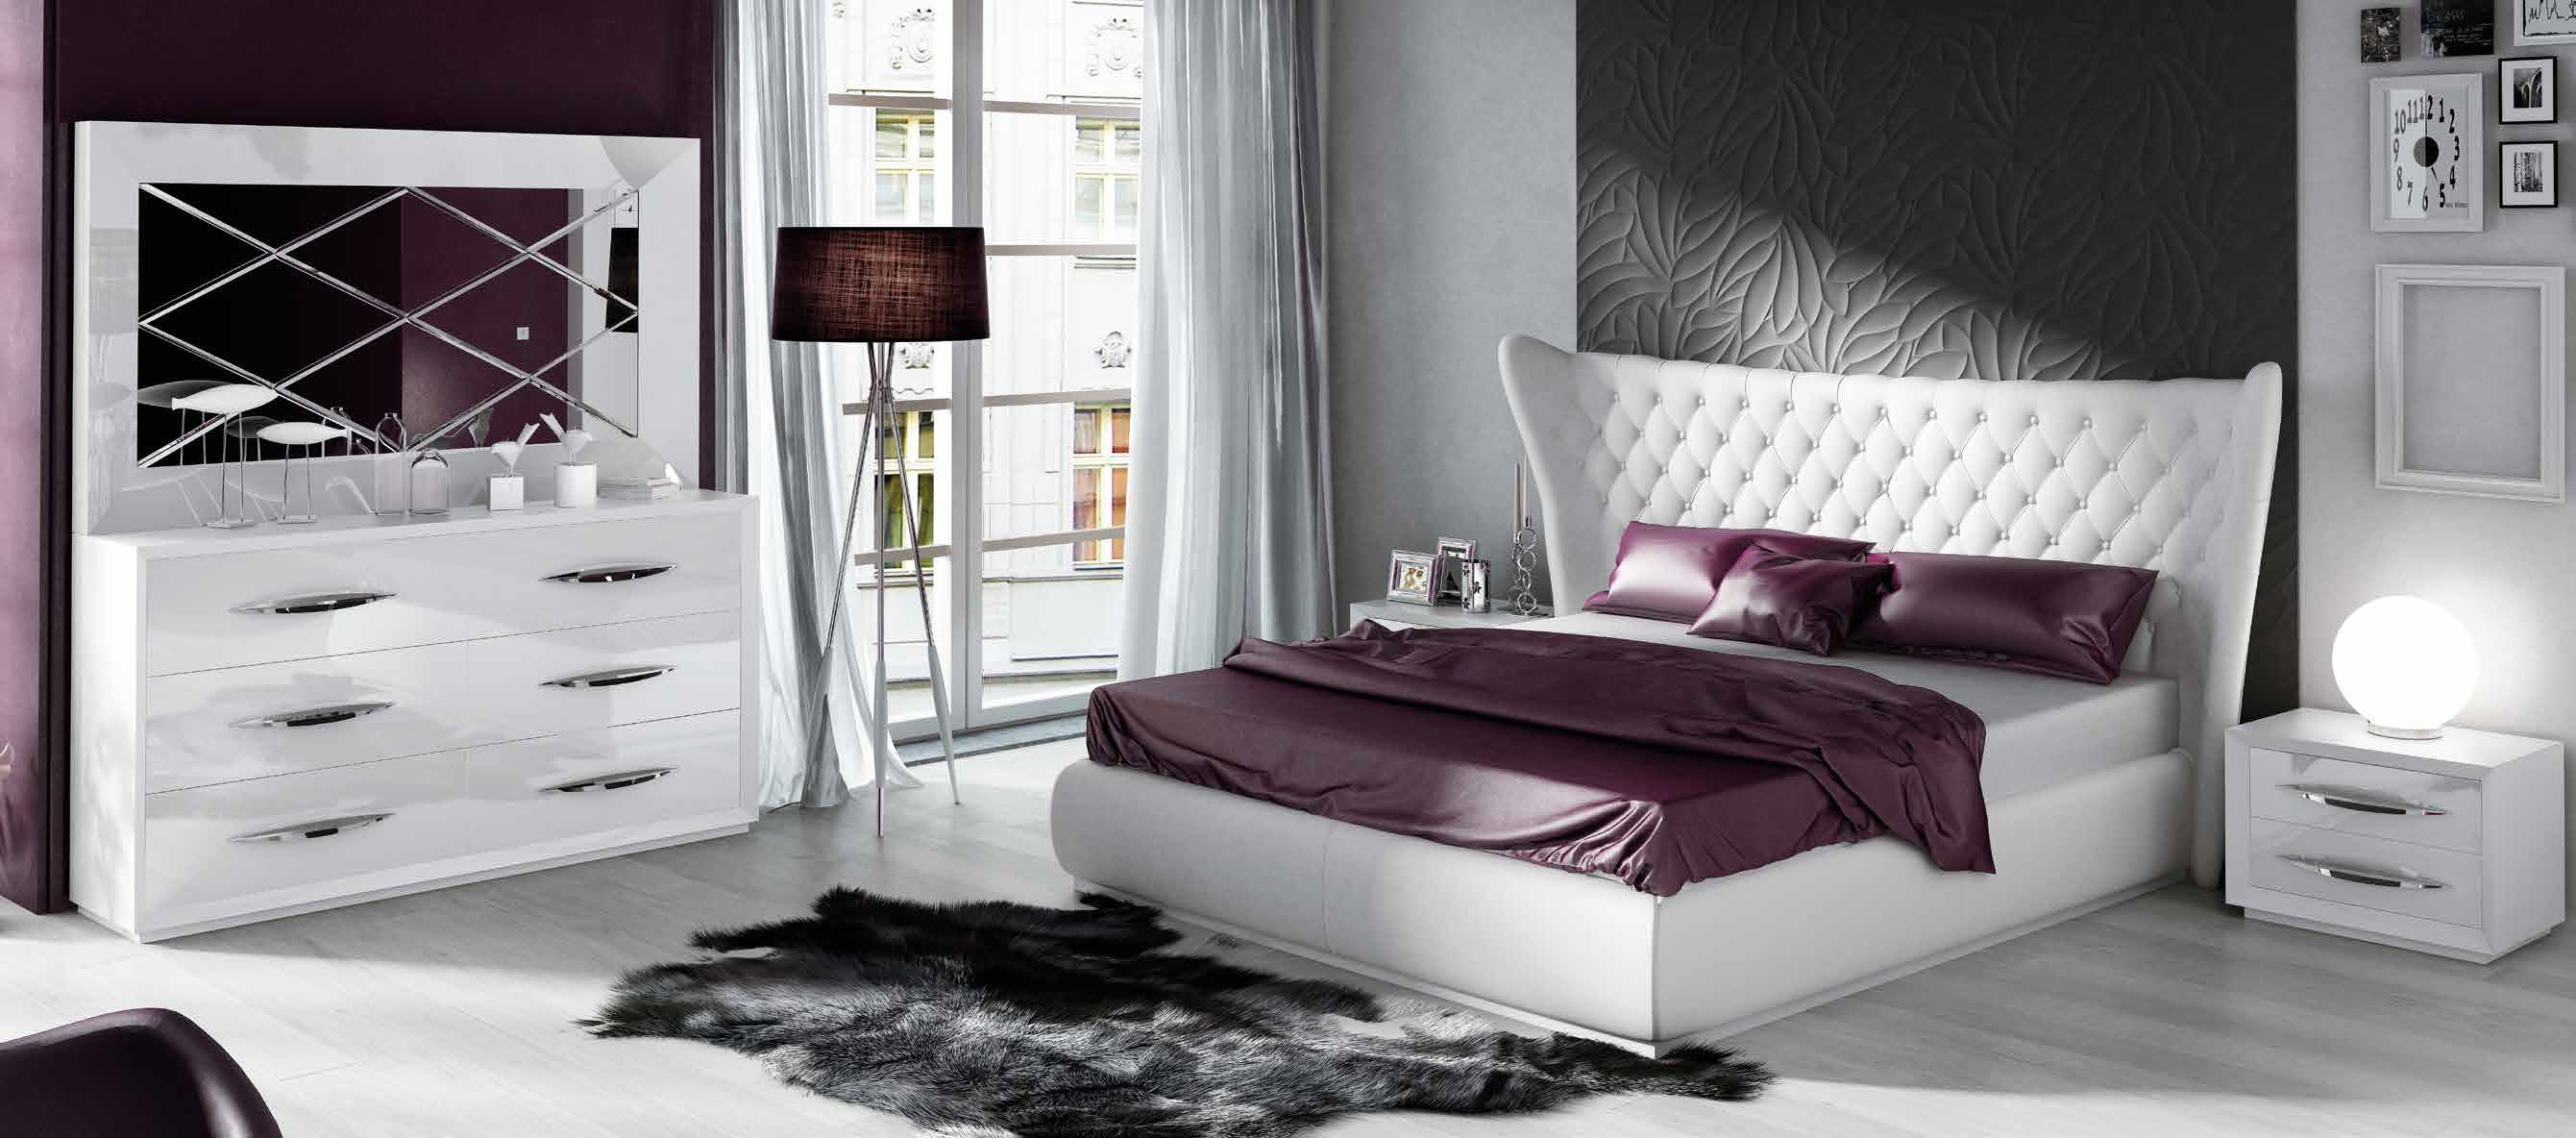 Brands Garcia Sabate, Modern Bedroom Spain DOR 83